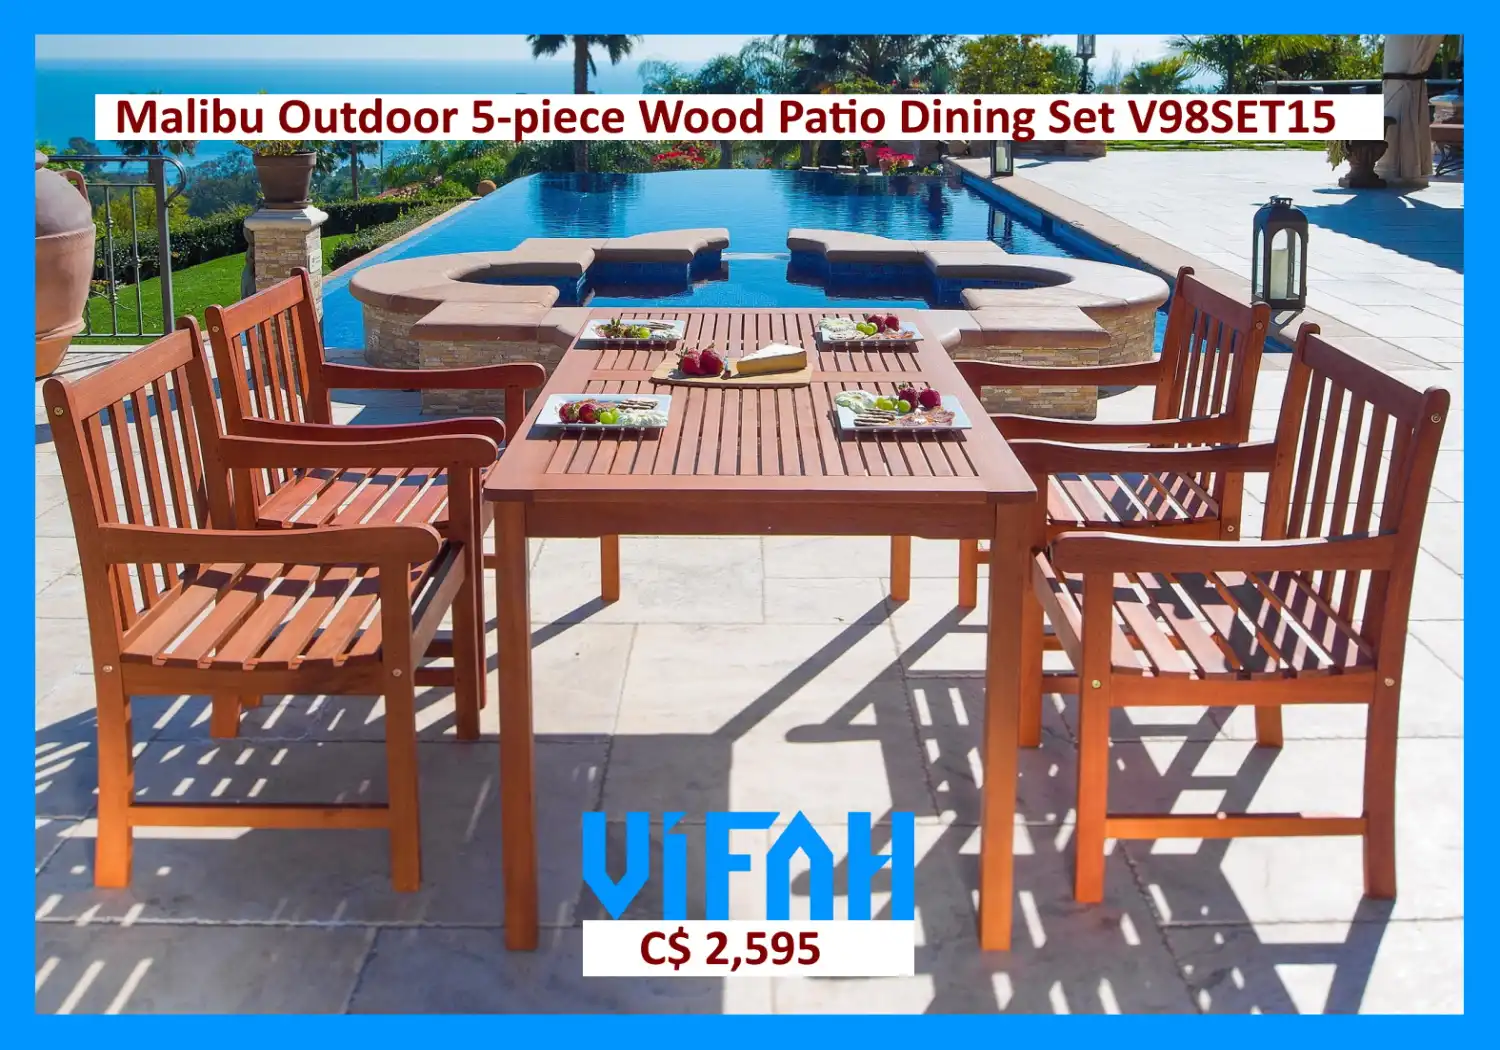 MALIBU Outdoor #V98SET15 5-piece Wood Patio Dining Set